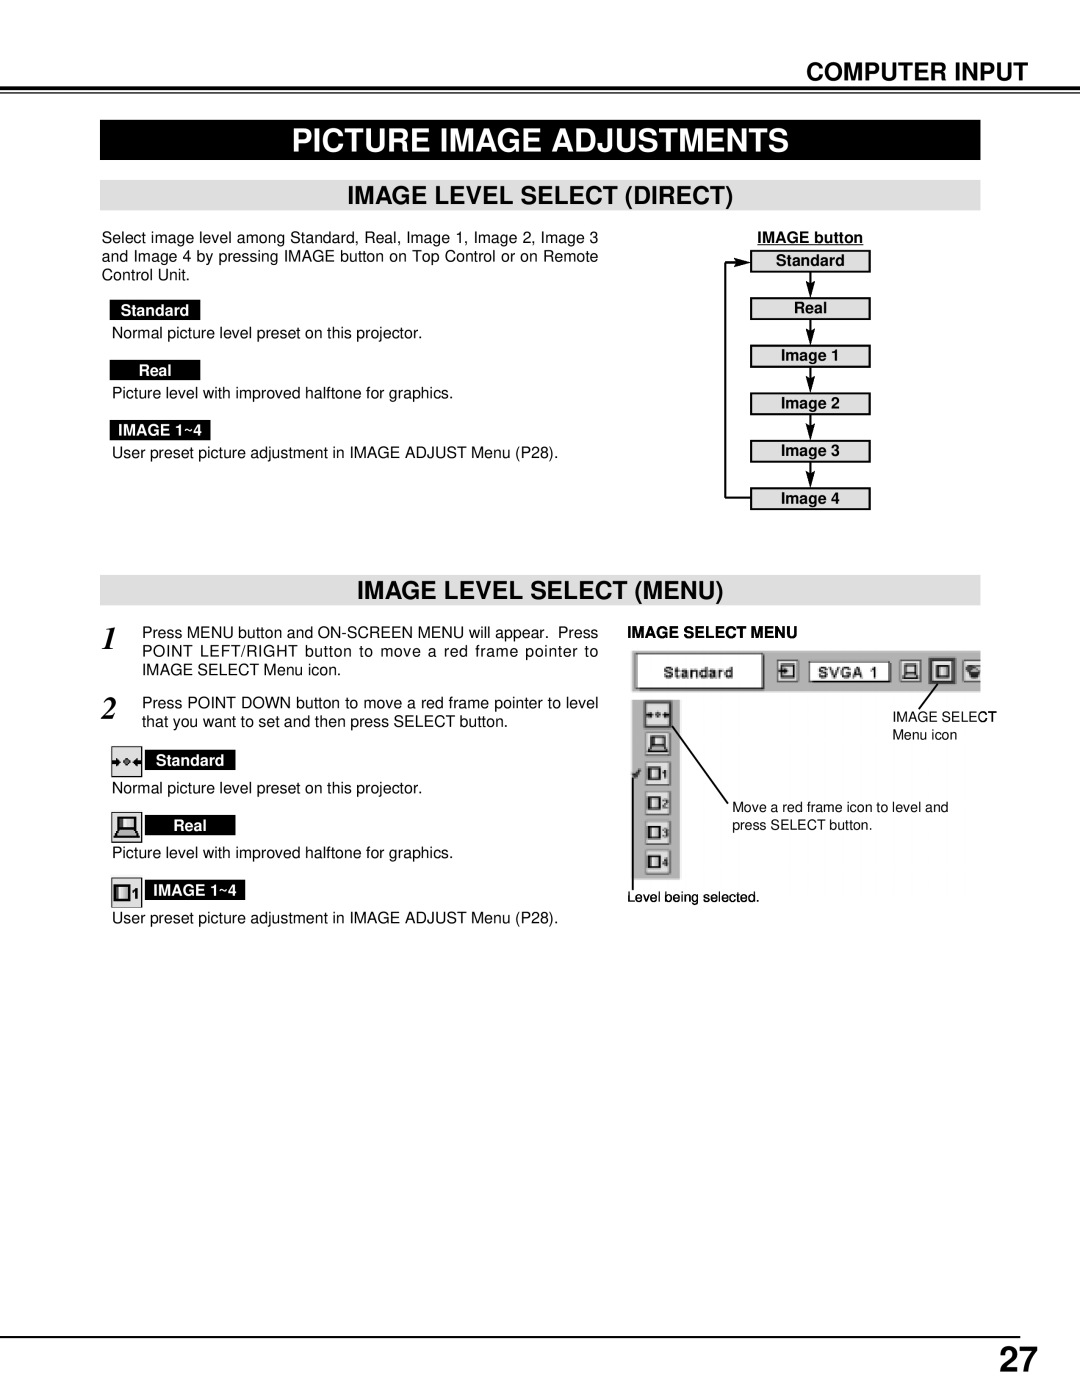 BOXLIGHT MP-41T manual Picture Image Adjustments, Image Level Select Direct, Image Level Select Menu, Computer Input 